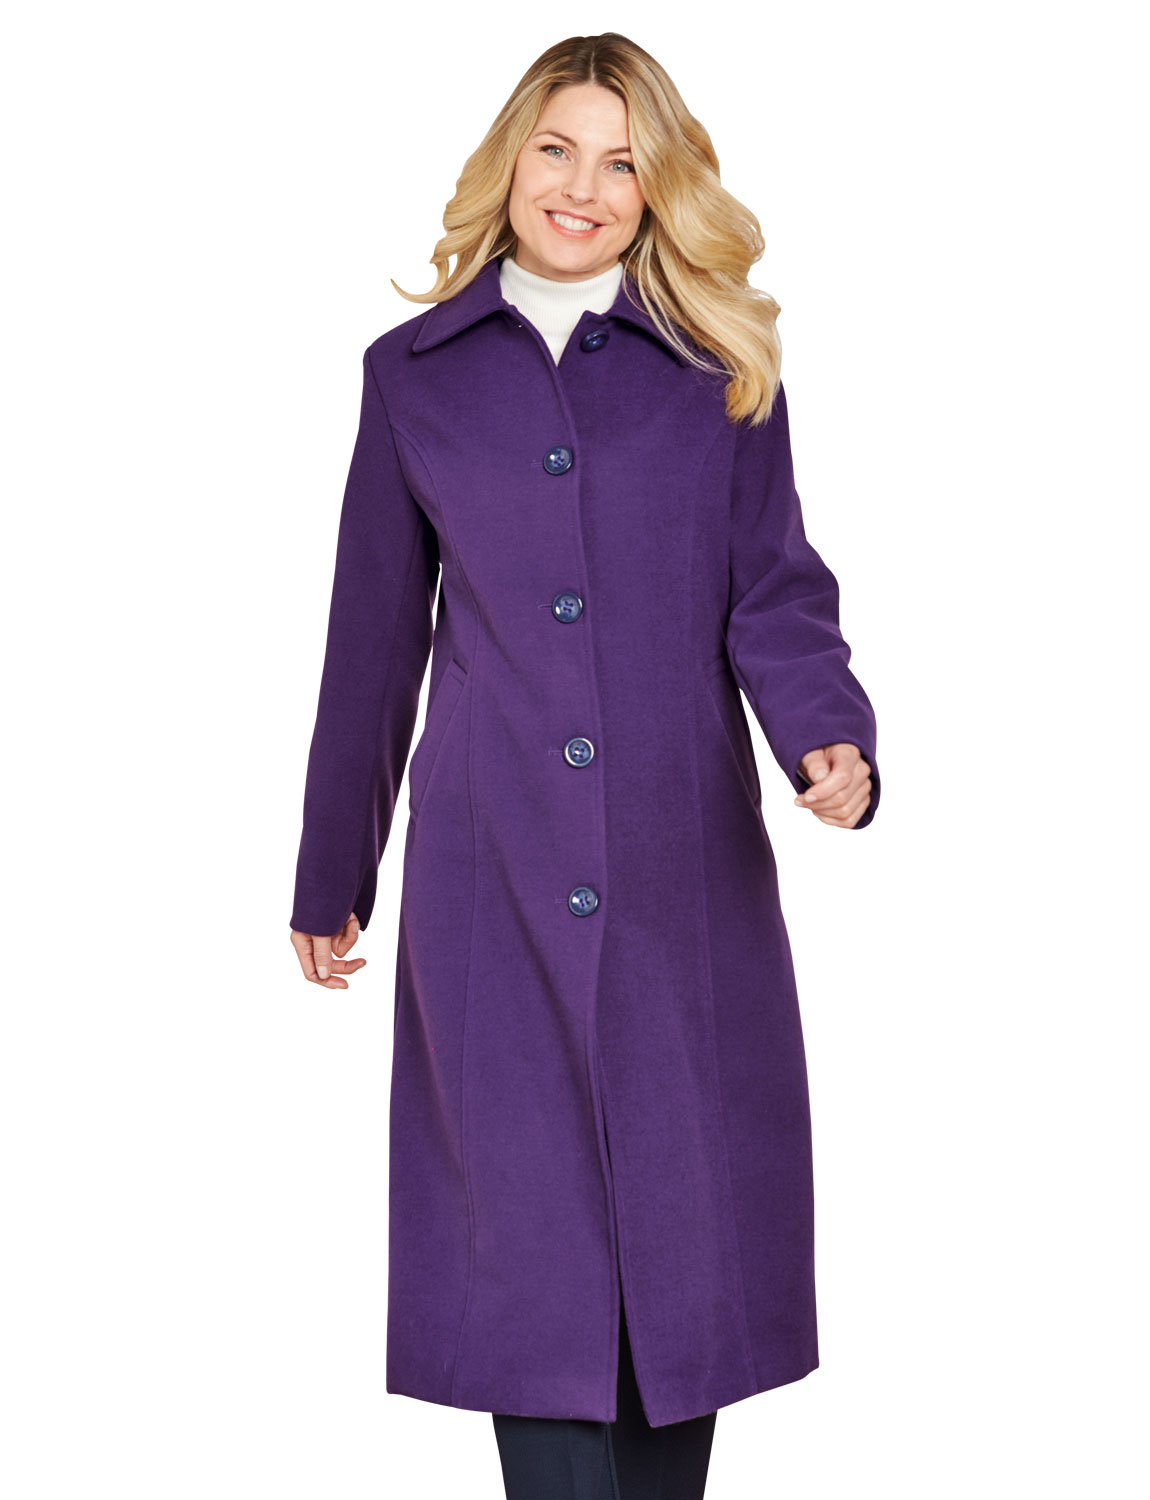 Ladies Faux Wool Coat Length 45 Inch | eBay